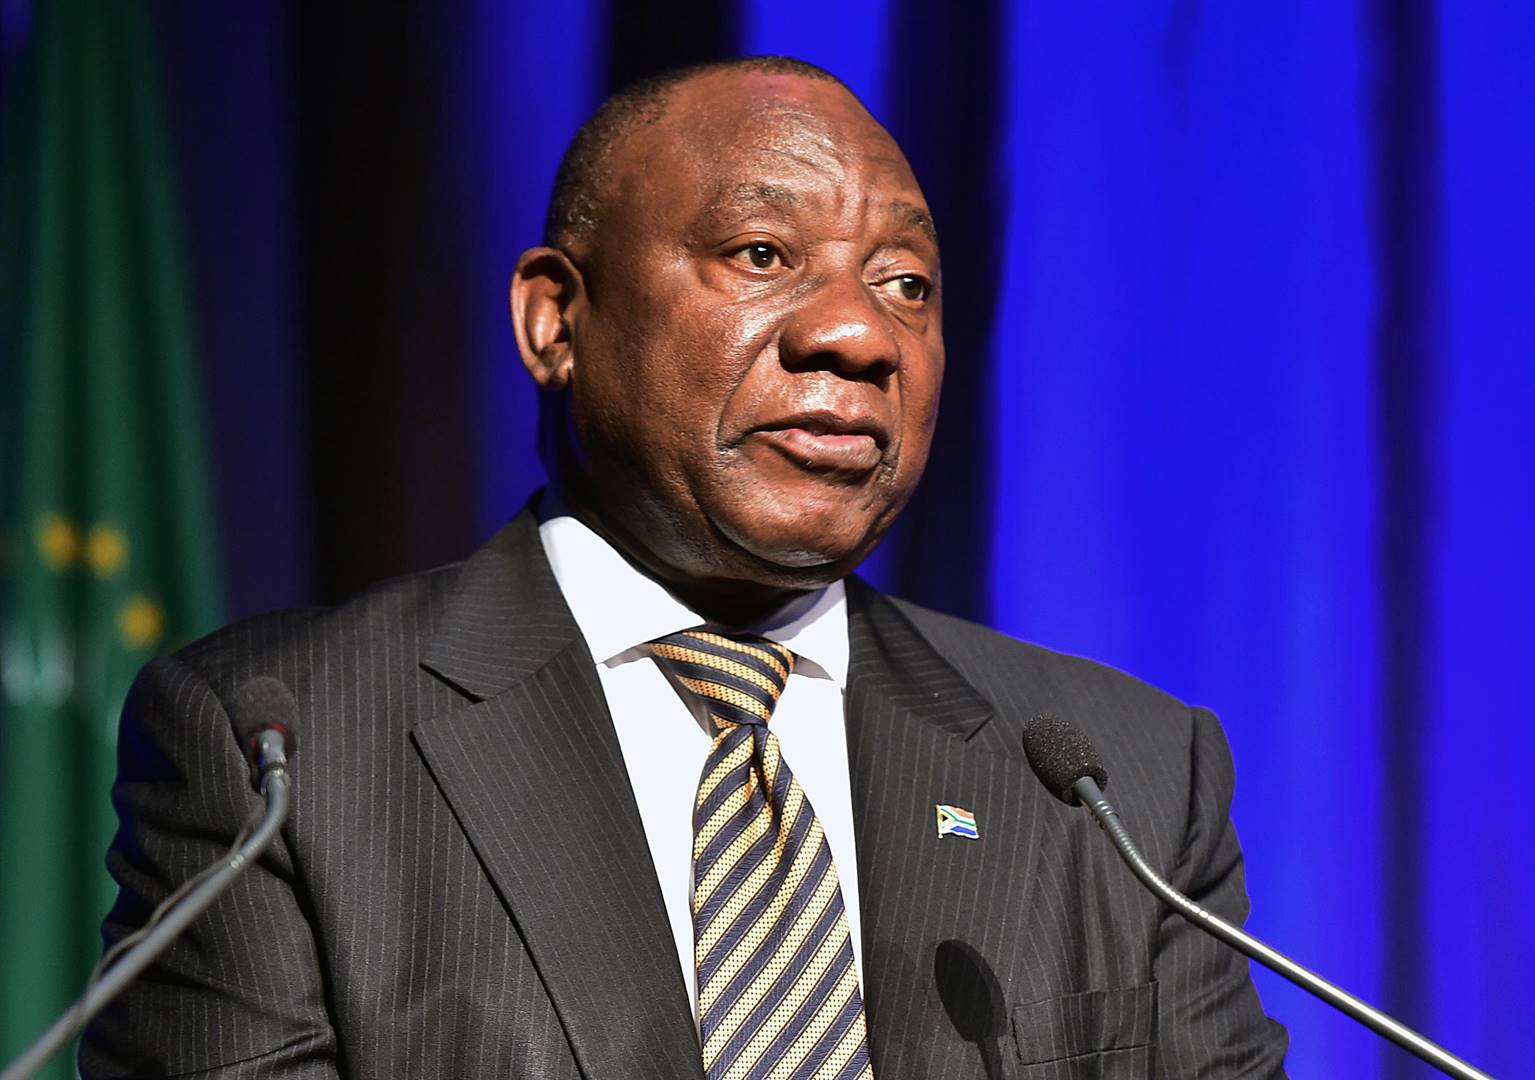 News24 | BHP bid for Anglo: Presidency comes out swinging over anti-SA narrative ...